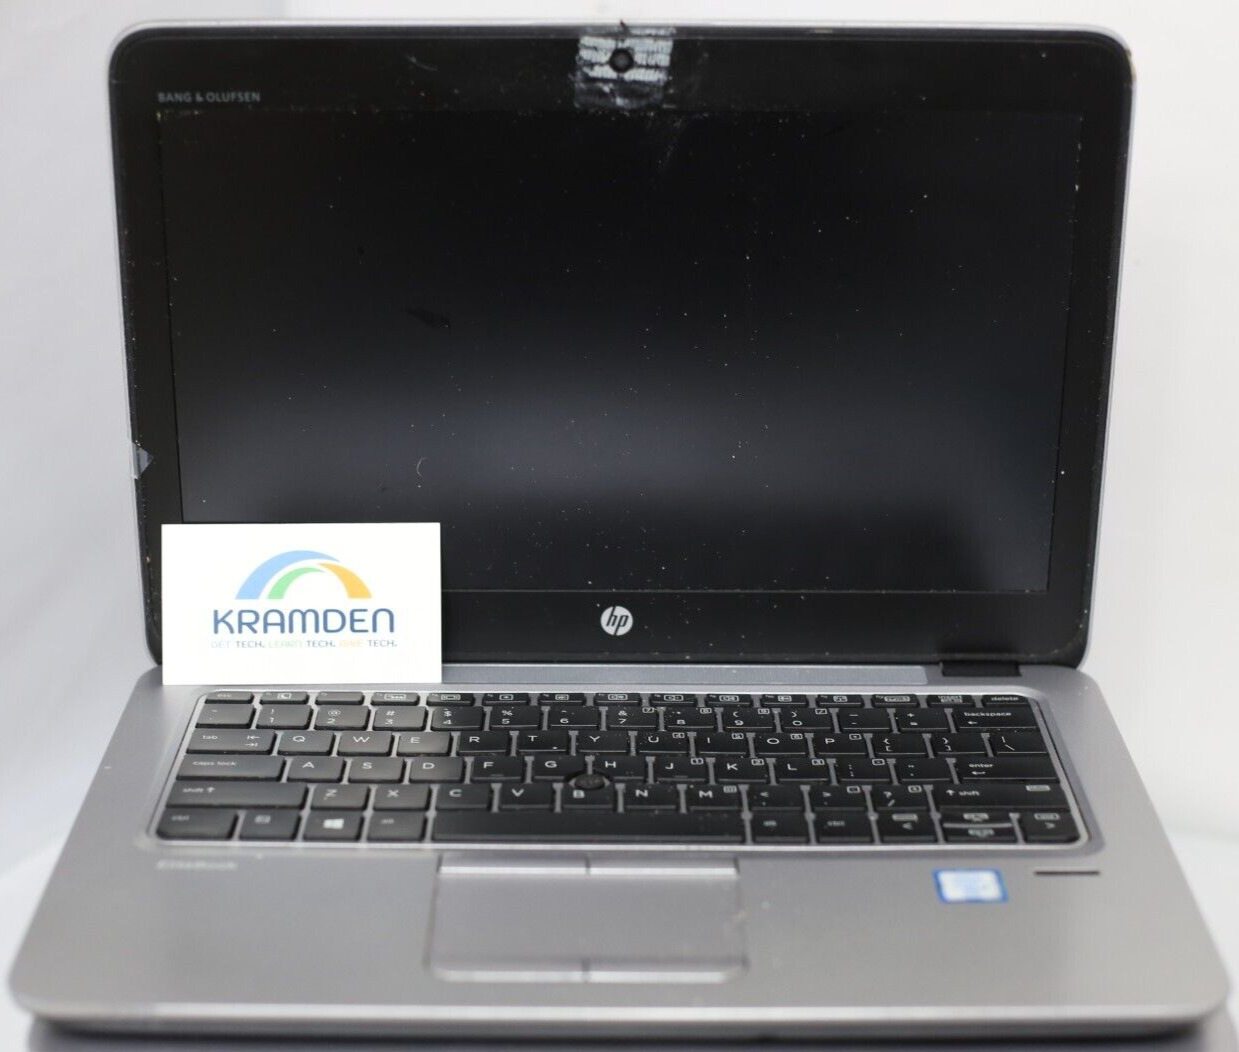 Lot of 6 HP Elitebook 820 G3 Laptops, i5-6300u, 8GB RAM, No HDD/OS, Grade C, B3